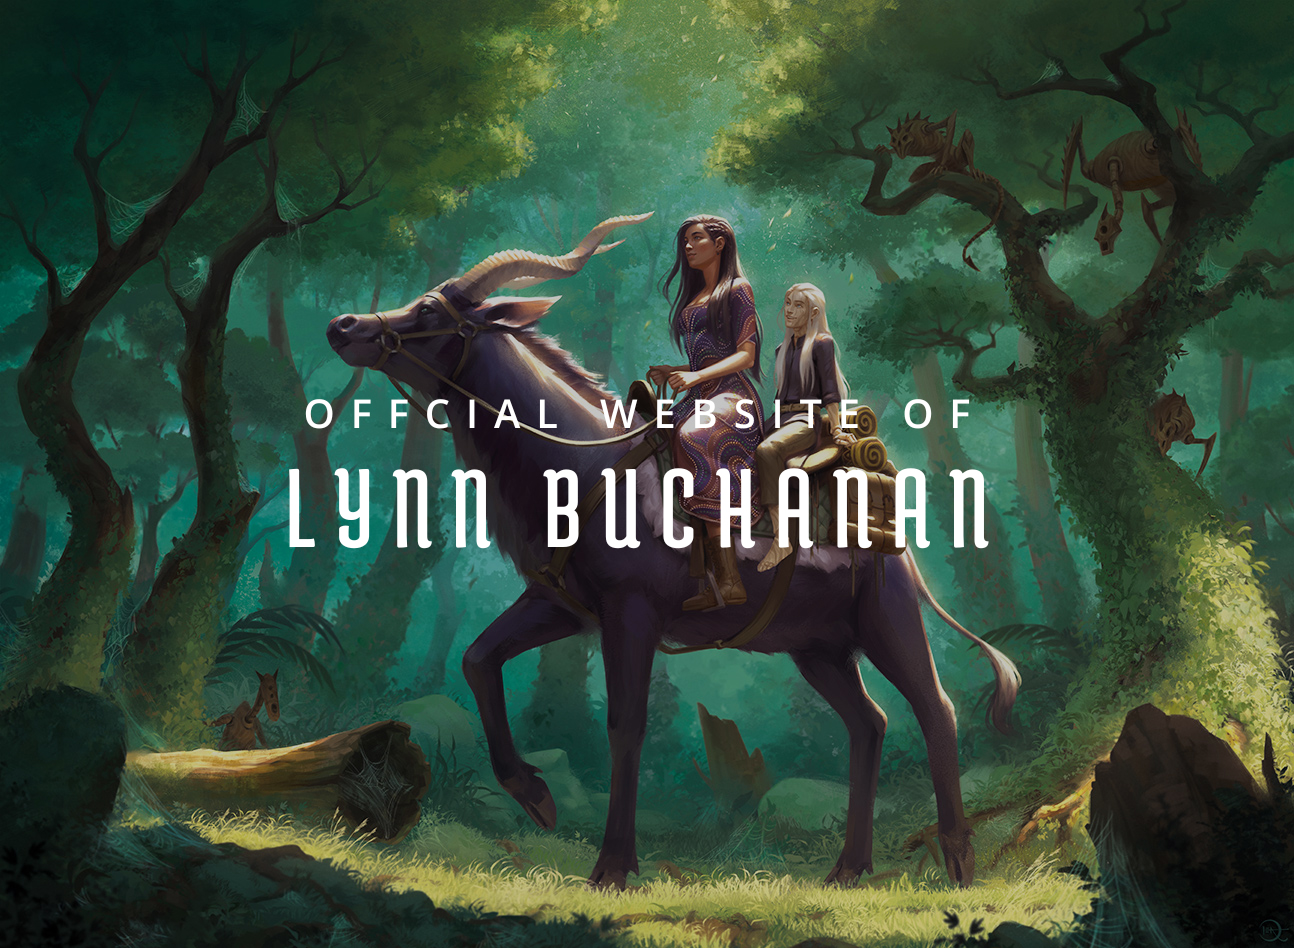 Lynn Buchanan